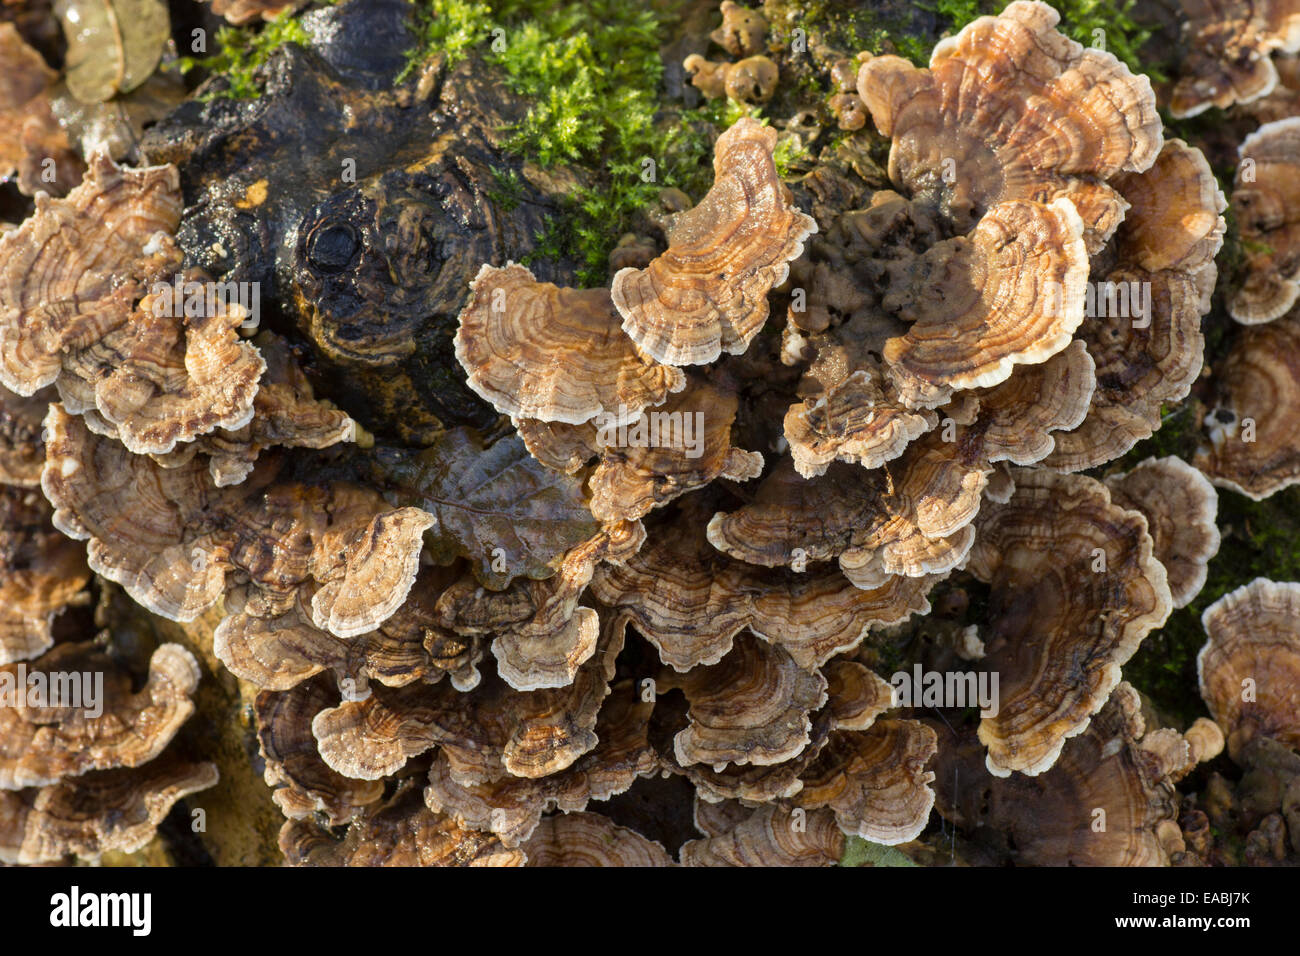 Uppersides of the turkeytail bracket fungus, Trametes versicolor, on a fallen log Stock Photo